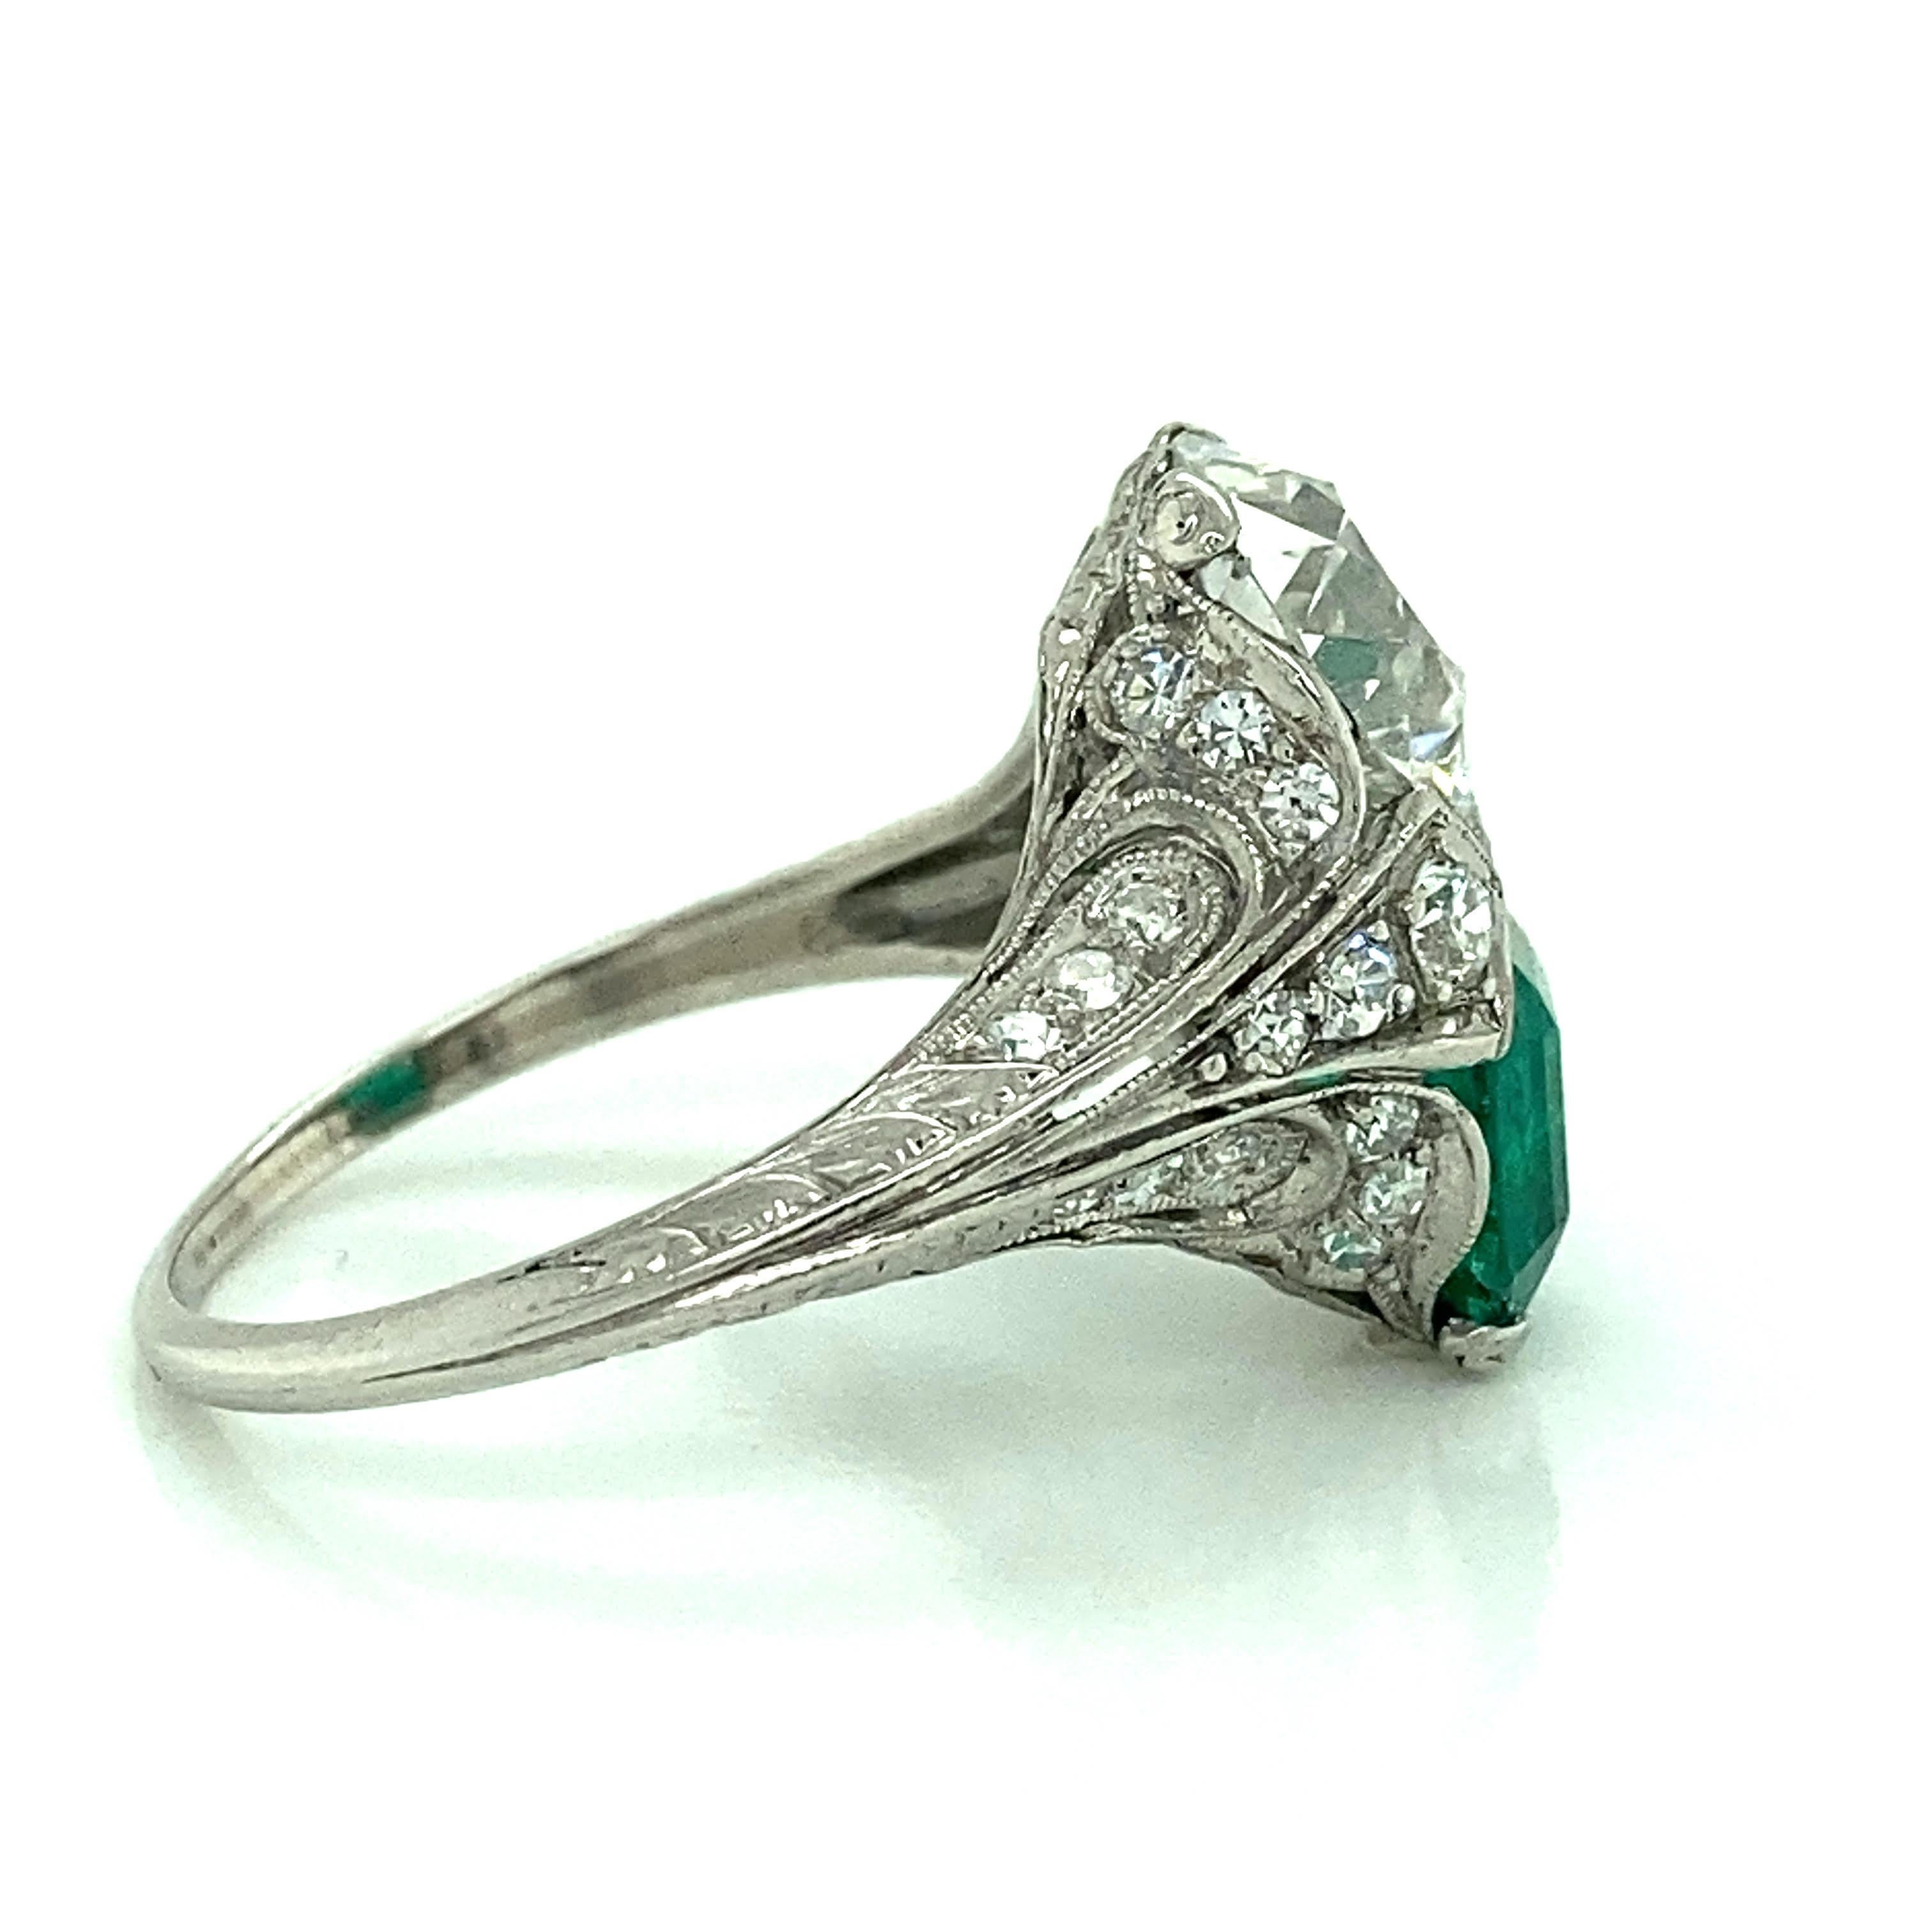 Vintage Platinum Ring
1.96ct Old European Cut Diamond
G, VS2 GIA Cert
1.43ct Columbian Emerald. GIA Cert
Ring size 6 3/4